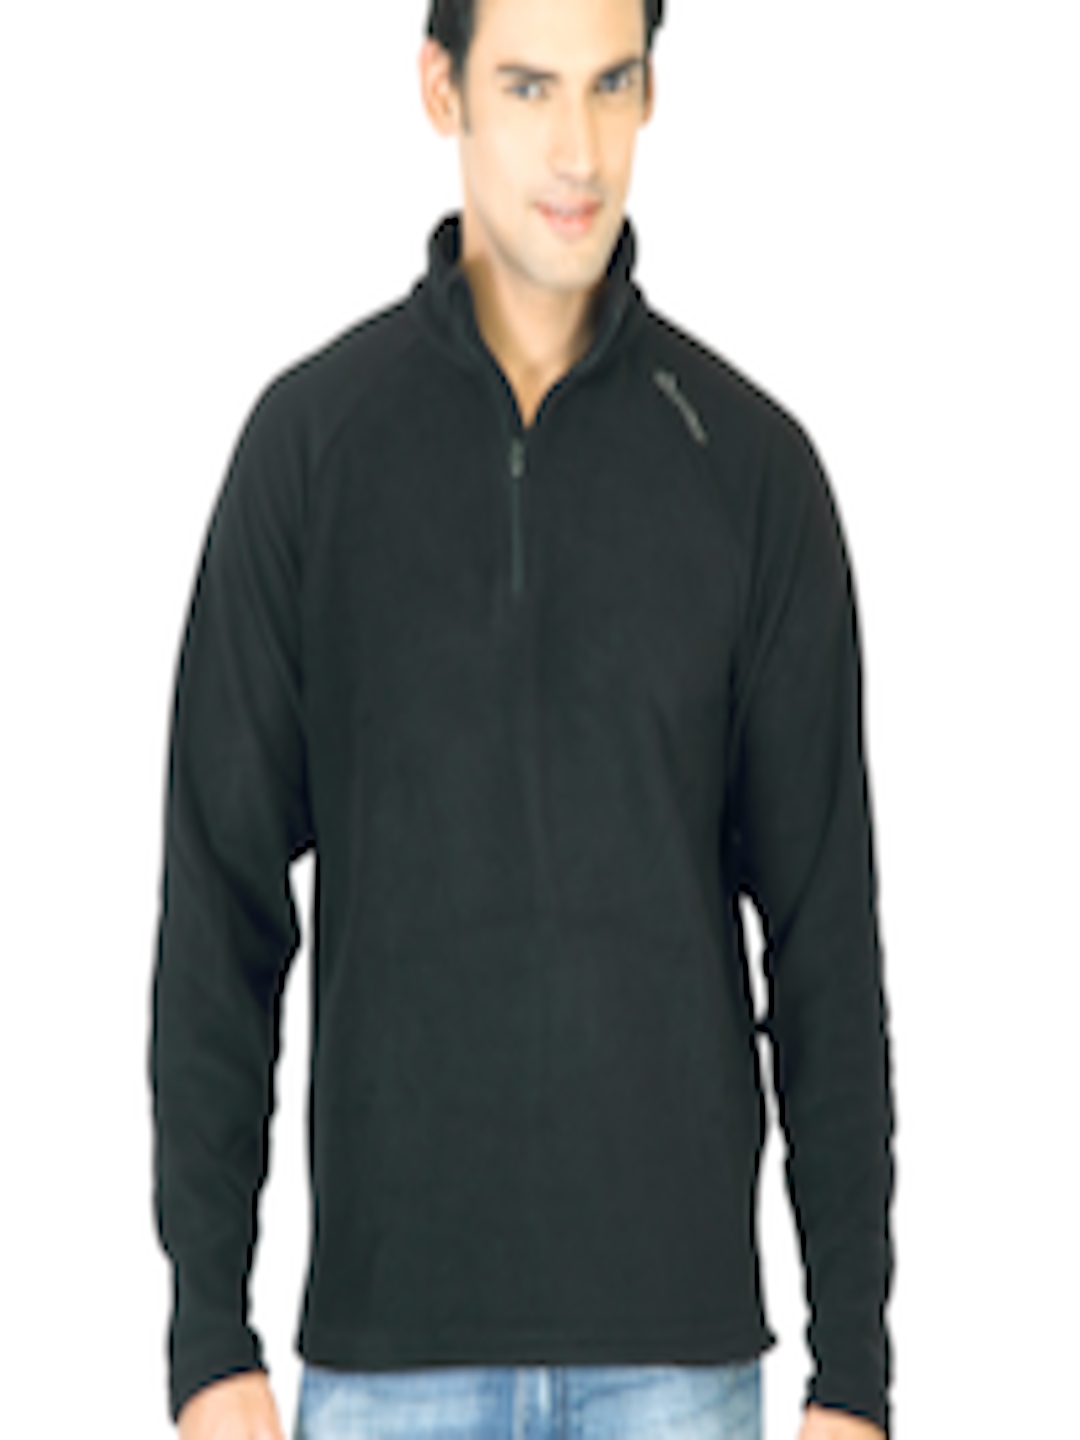 Buy Quechua By Decathlon Men Warm Fleece Black Jacket - Jackets for Men ...